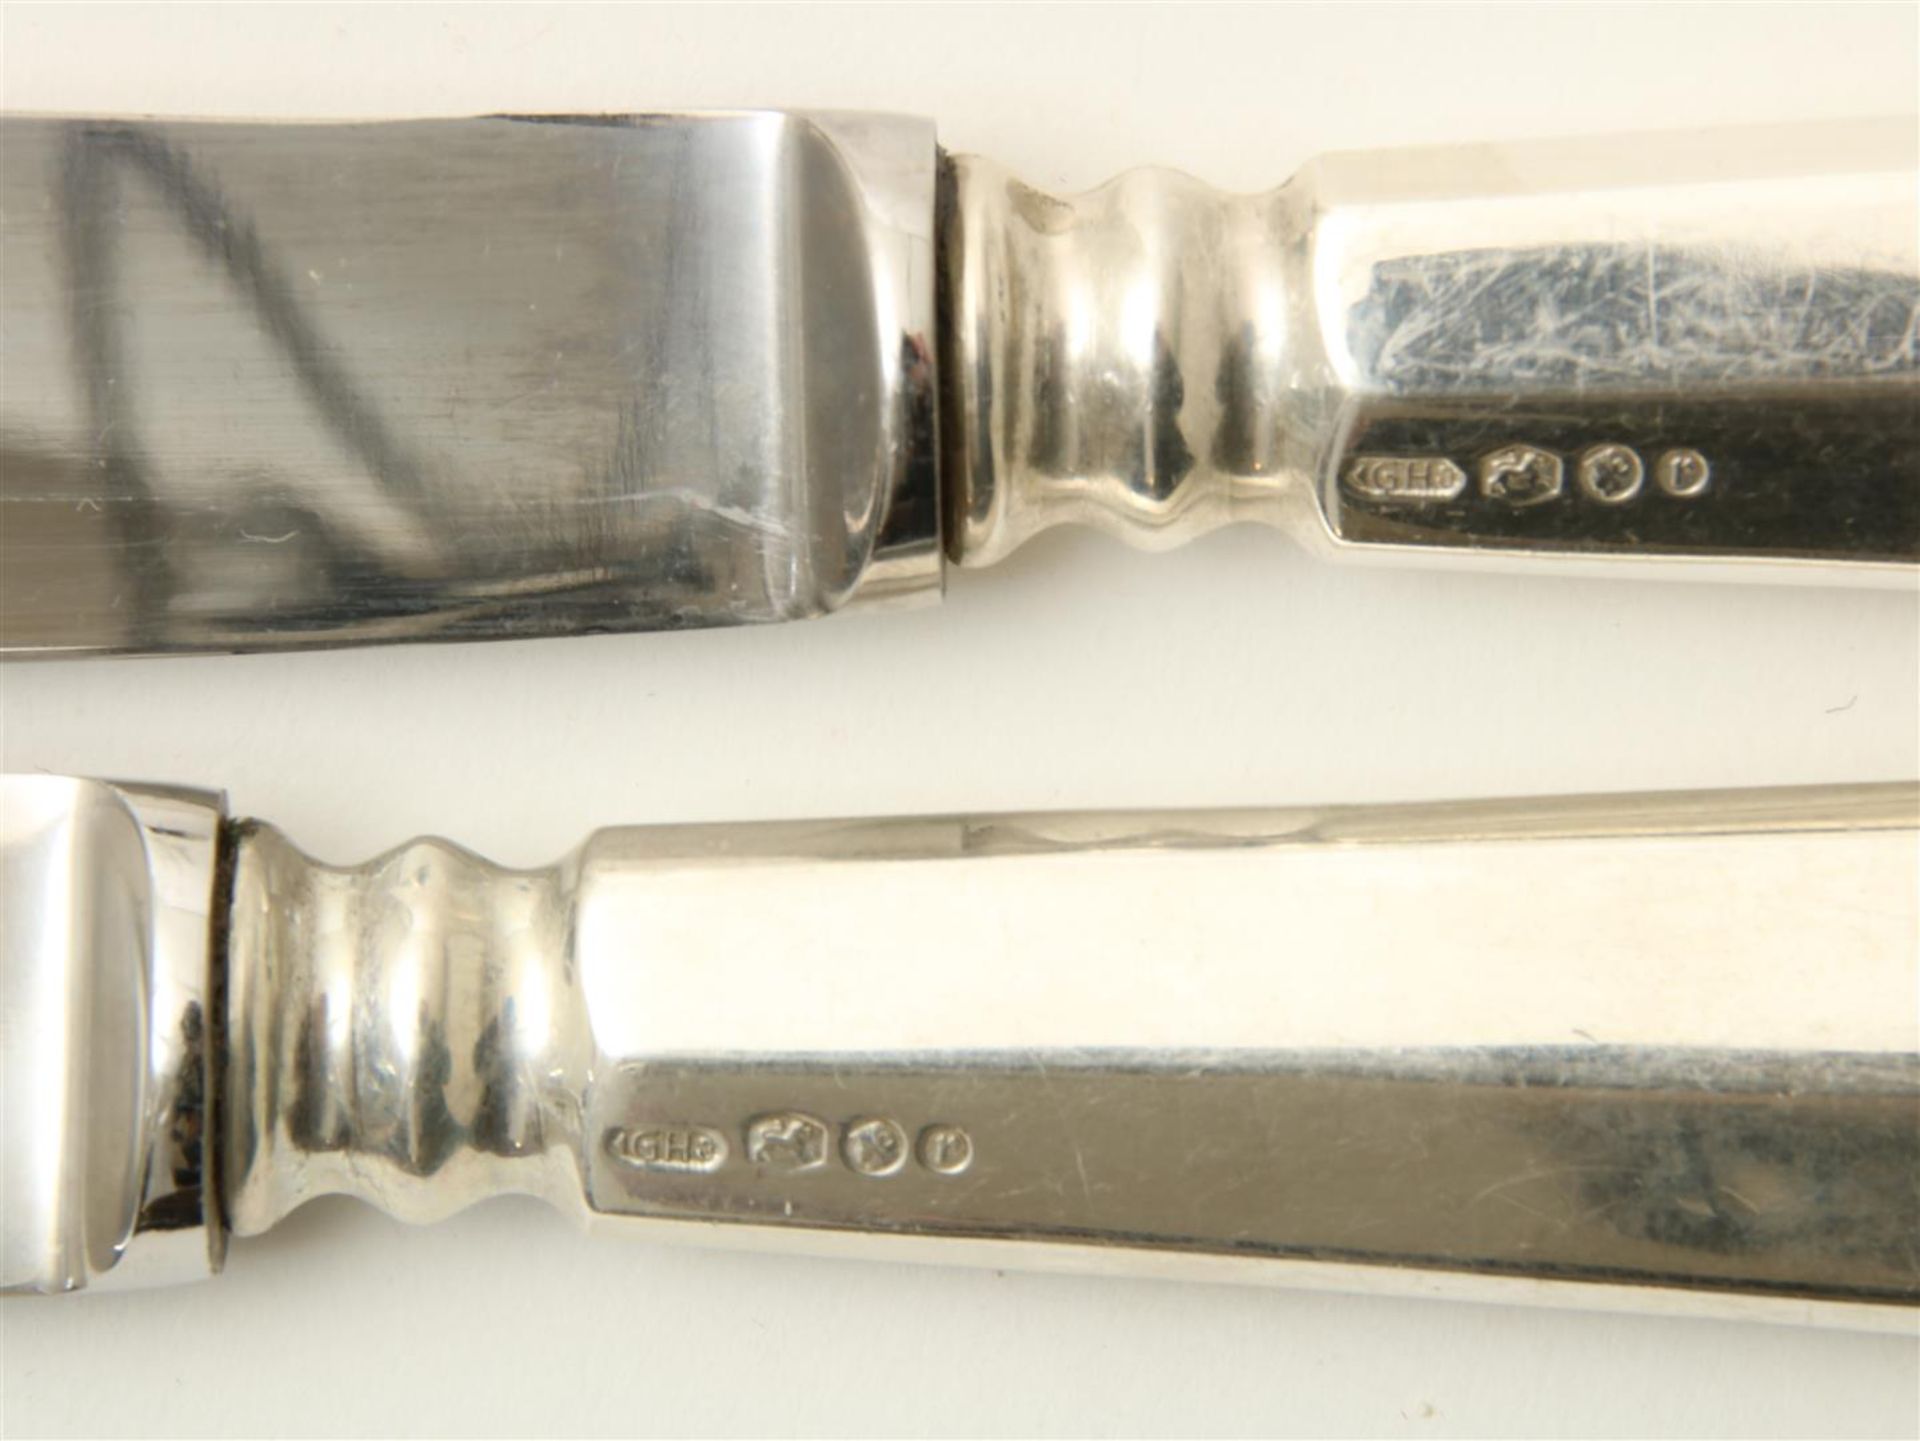 Six silver knifes, Haags Lofje,  Zilverfabriek Gebr. Huisman n.v., Schoonhoven - Bild 2 aus 2